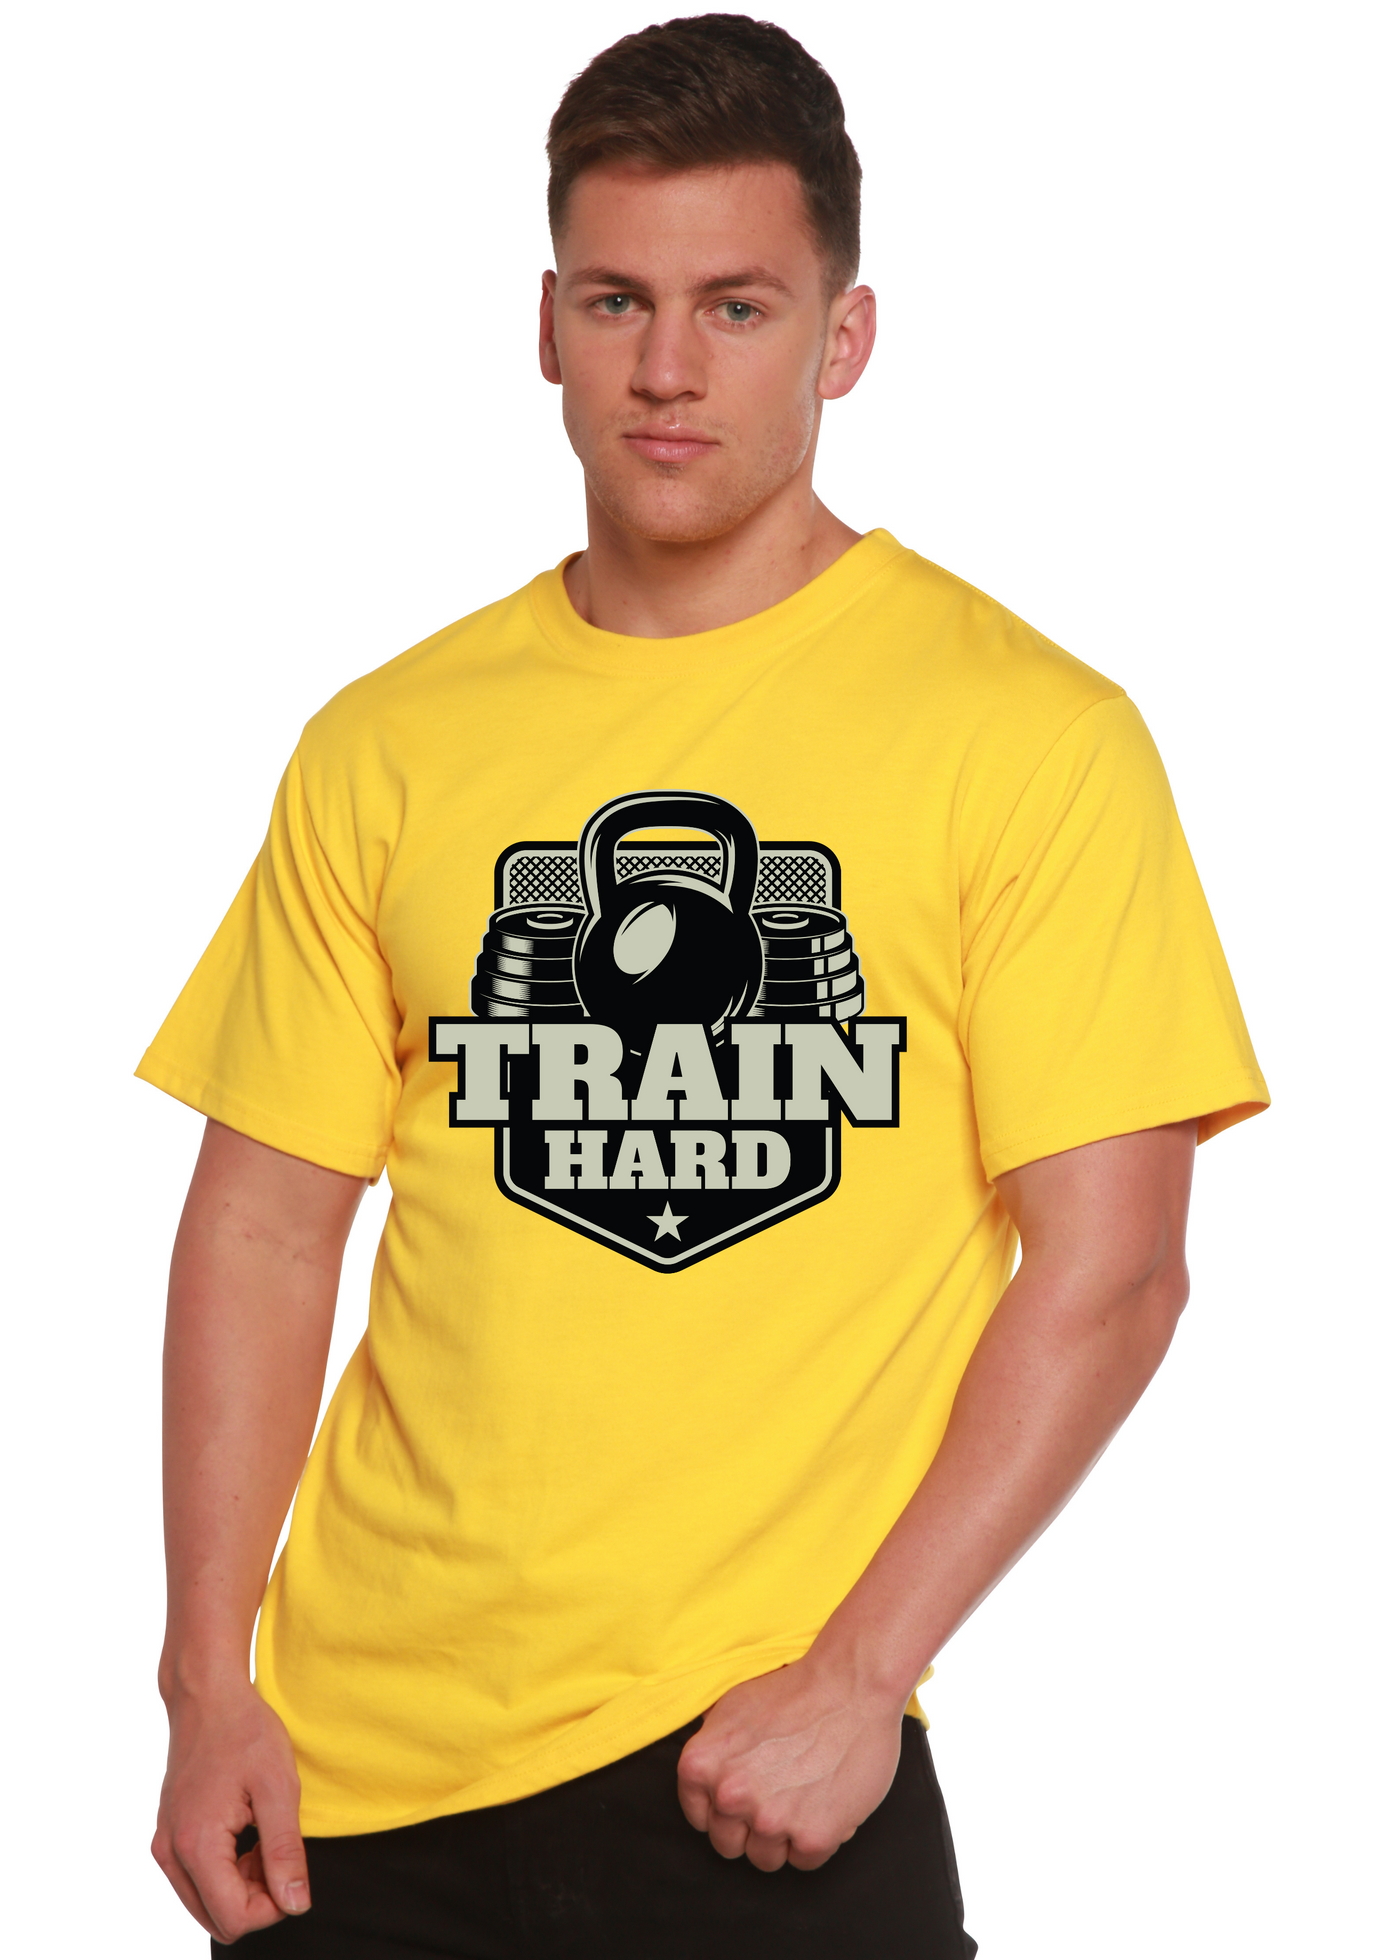 Train Hard men's bamboo tshirt lemon chrome